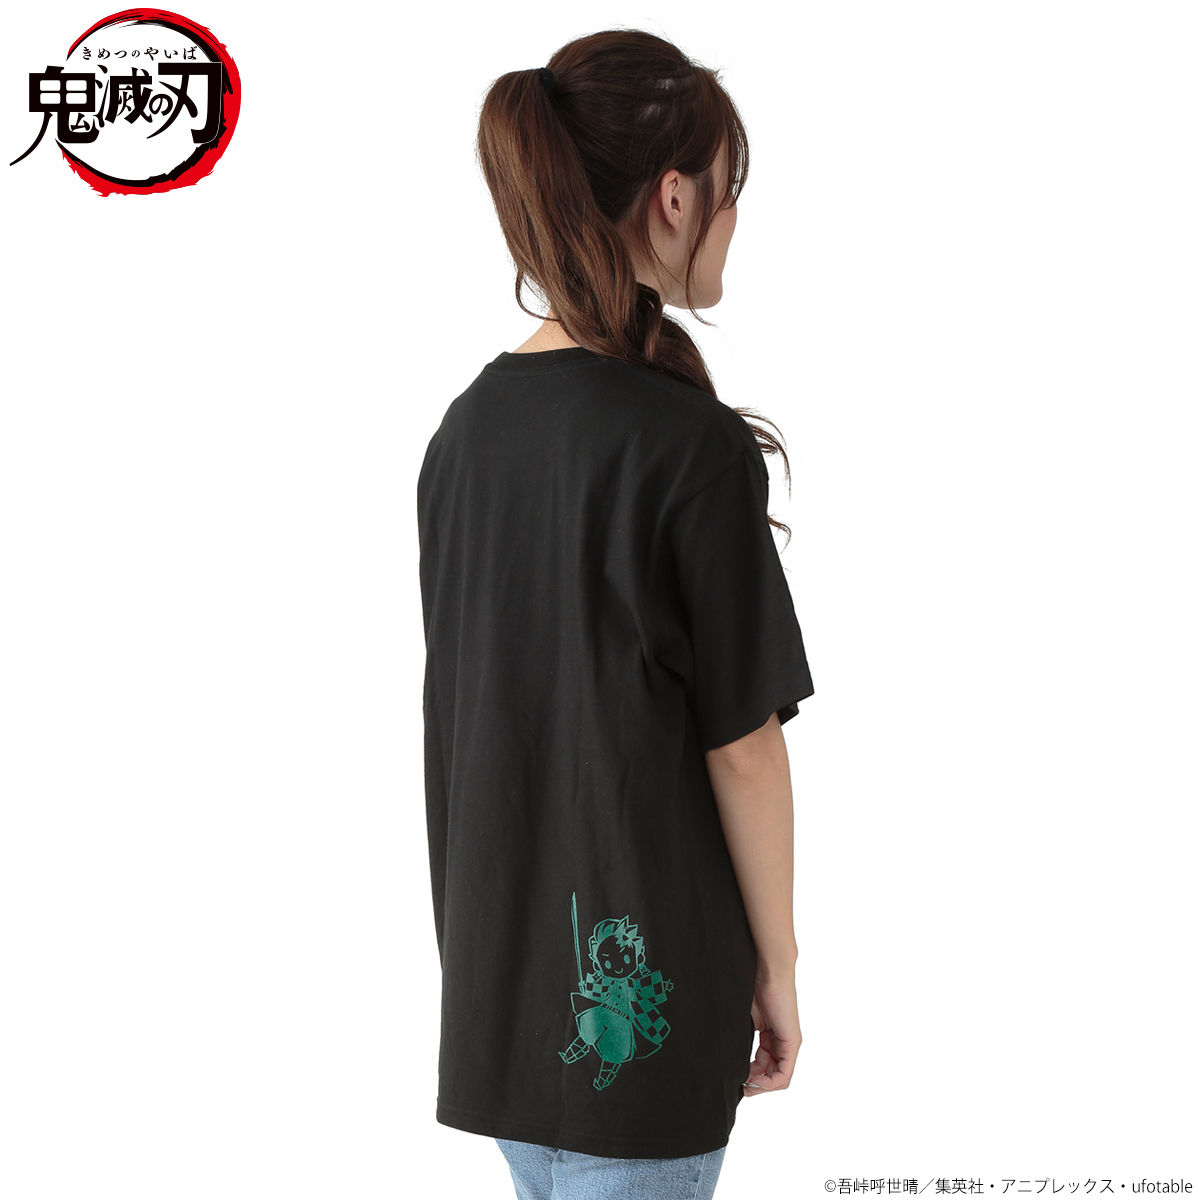 Super-Deformed Characters Black Color T-shirt—Demon Slayer: Kimetsu no Yaiba